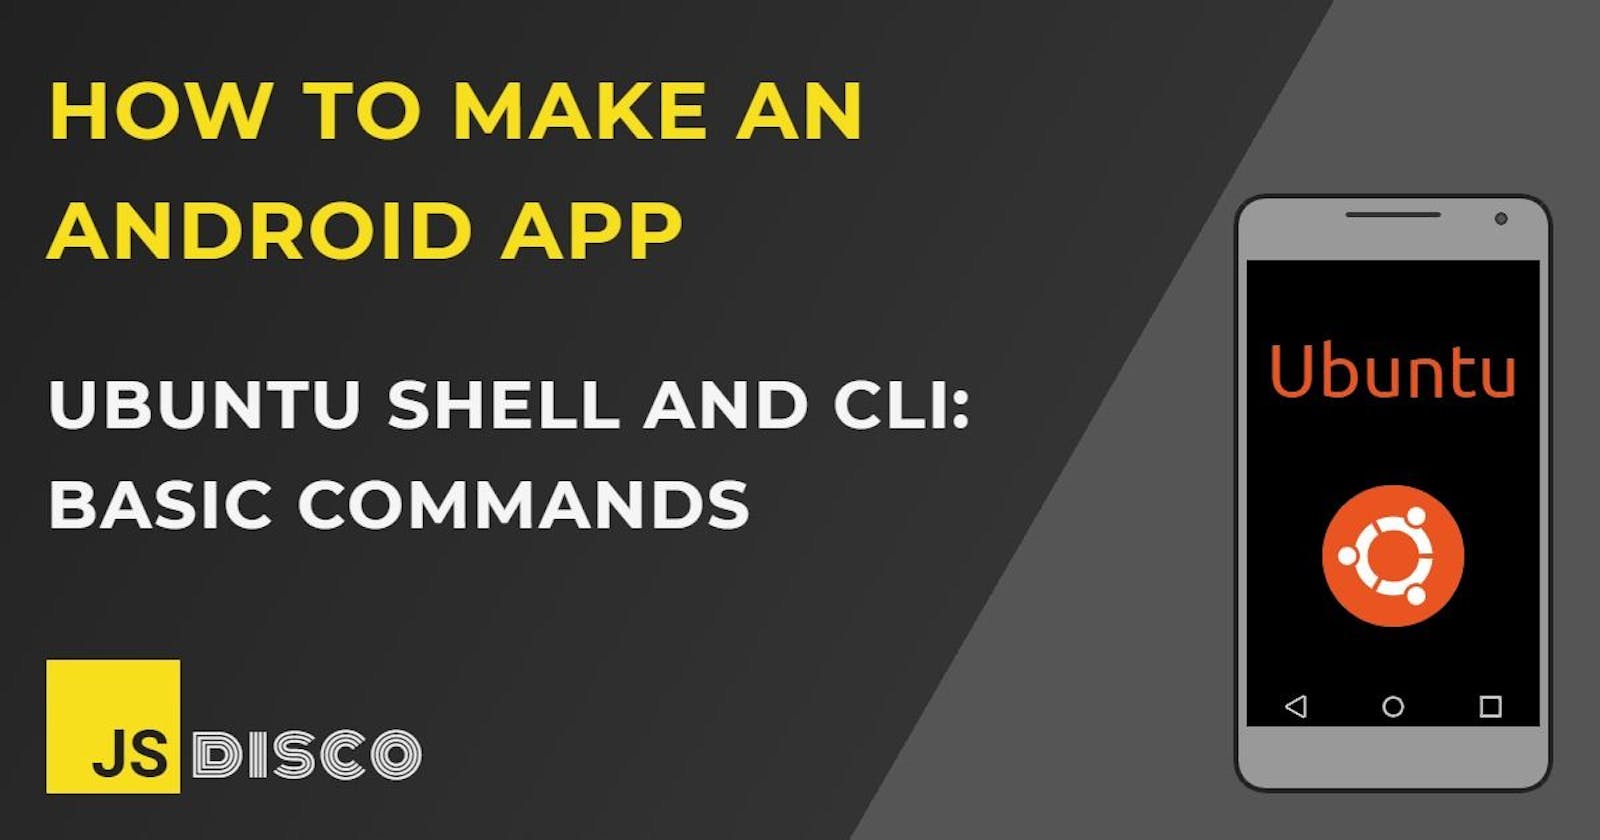 Ubuntu Shell and Command Line Interface